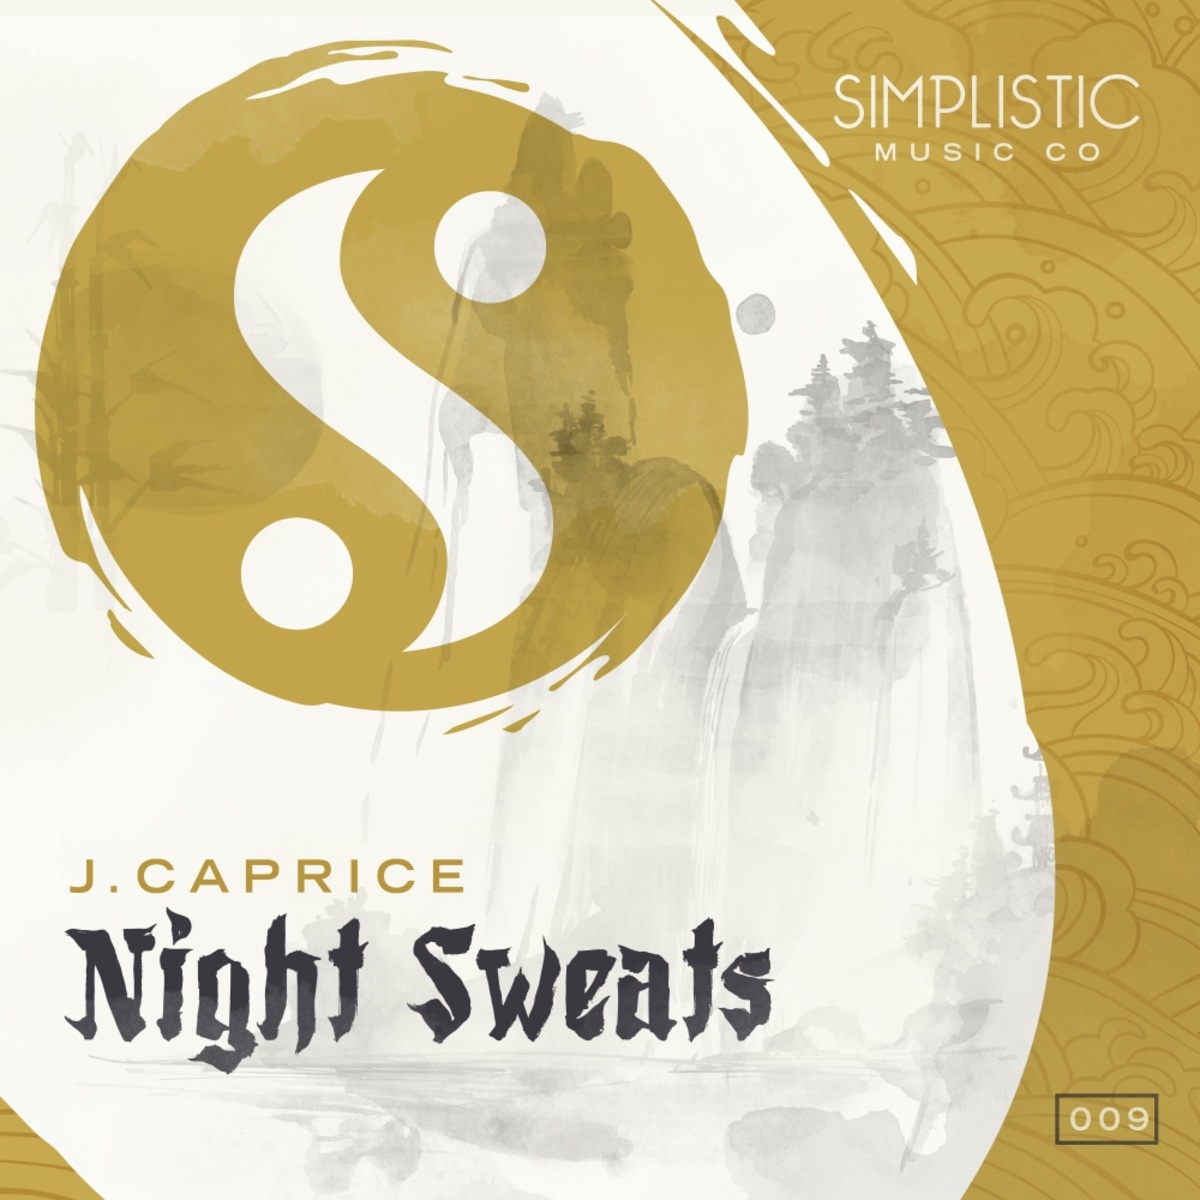 J.Caprice - Night Sweats / Simplistic Music Company